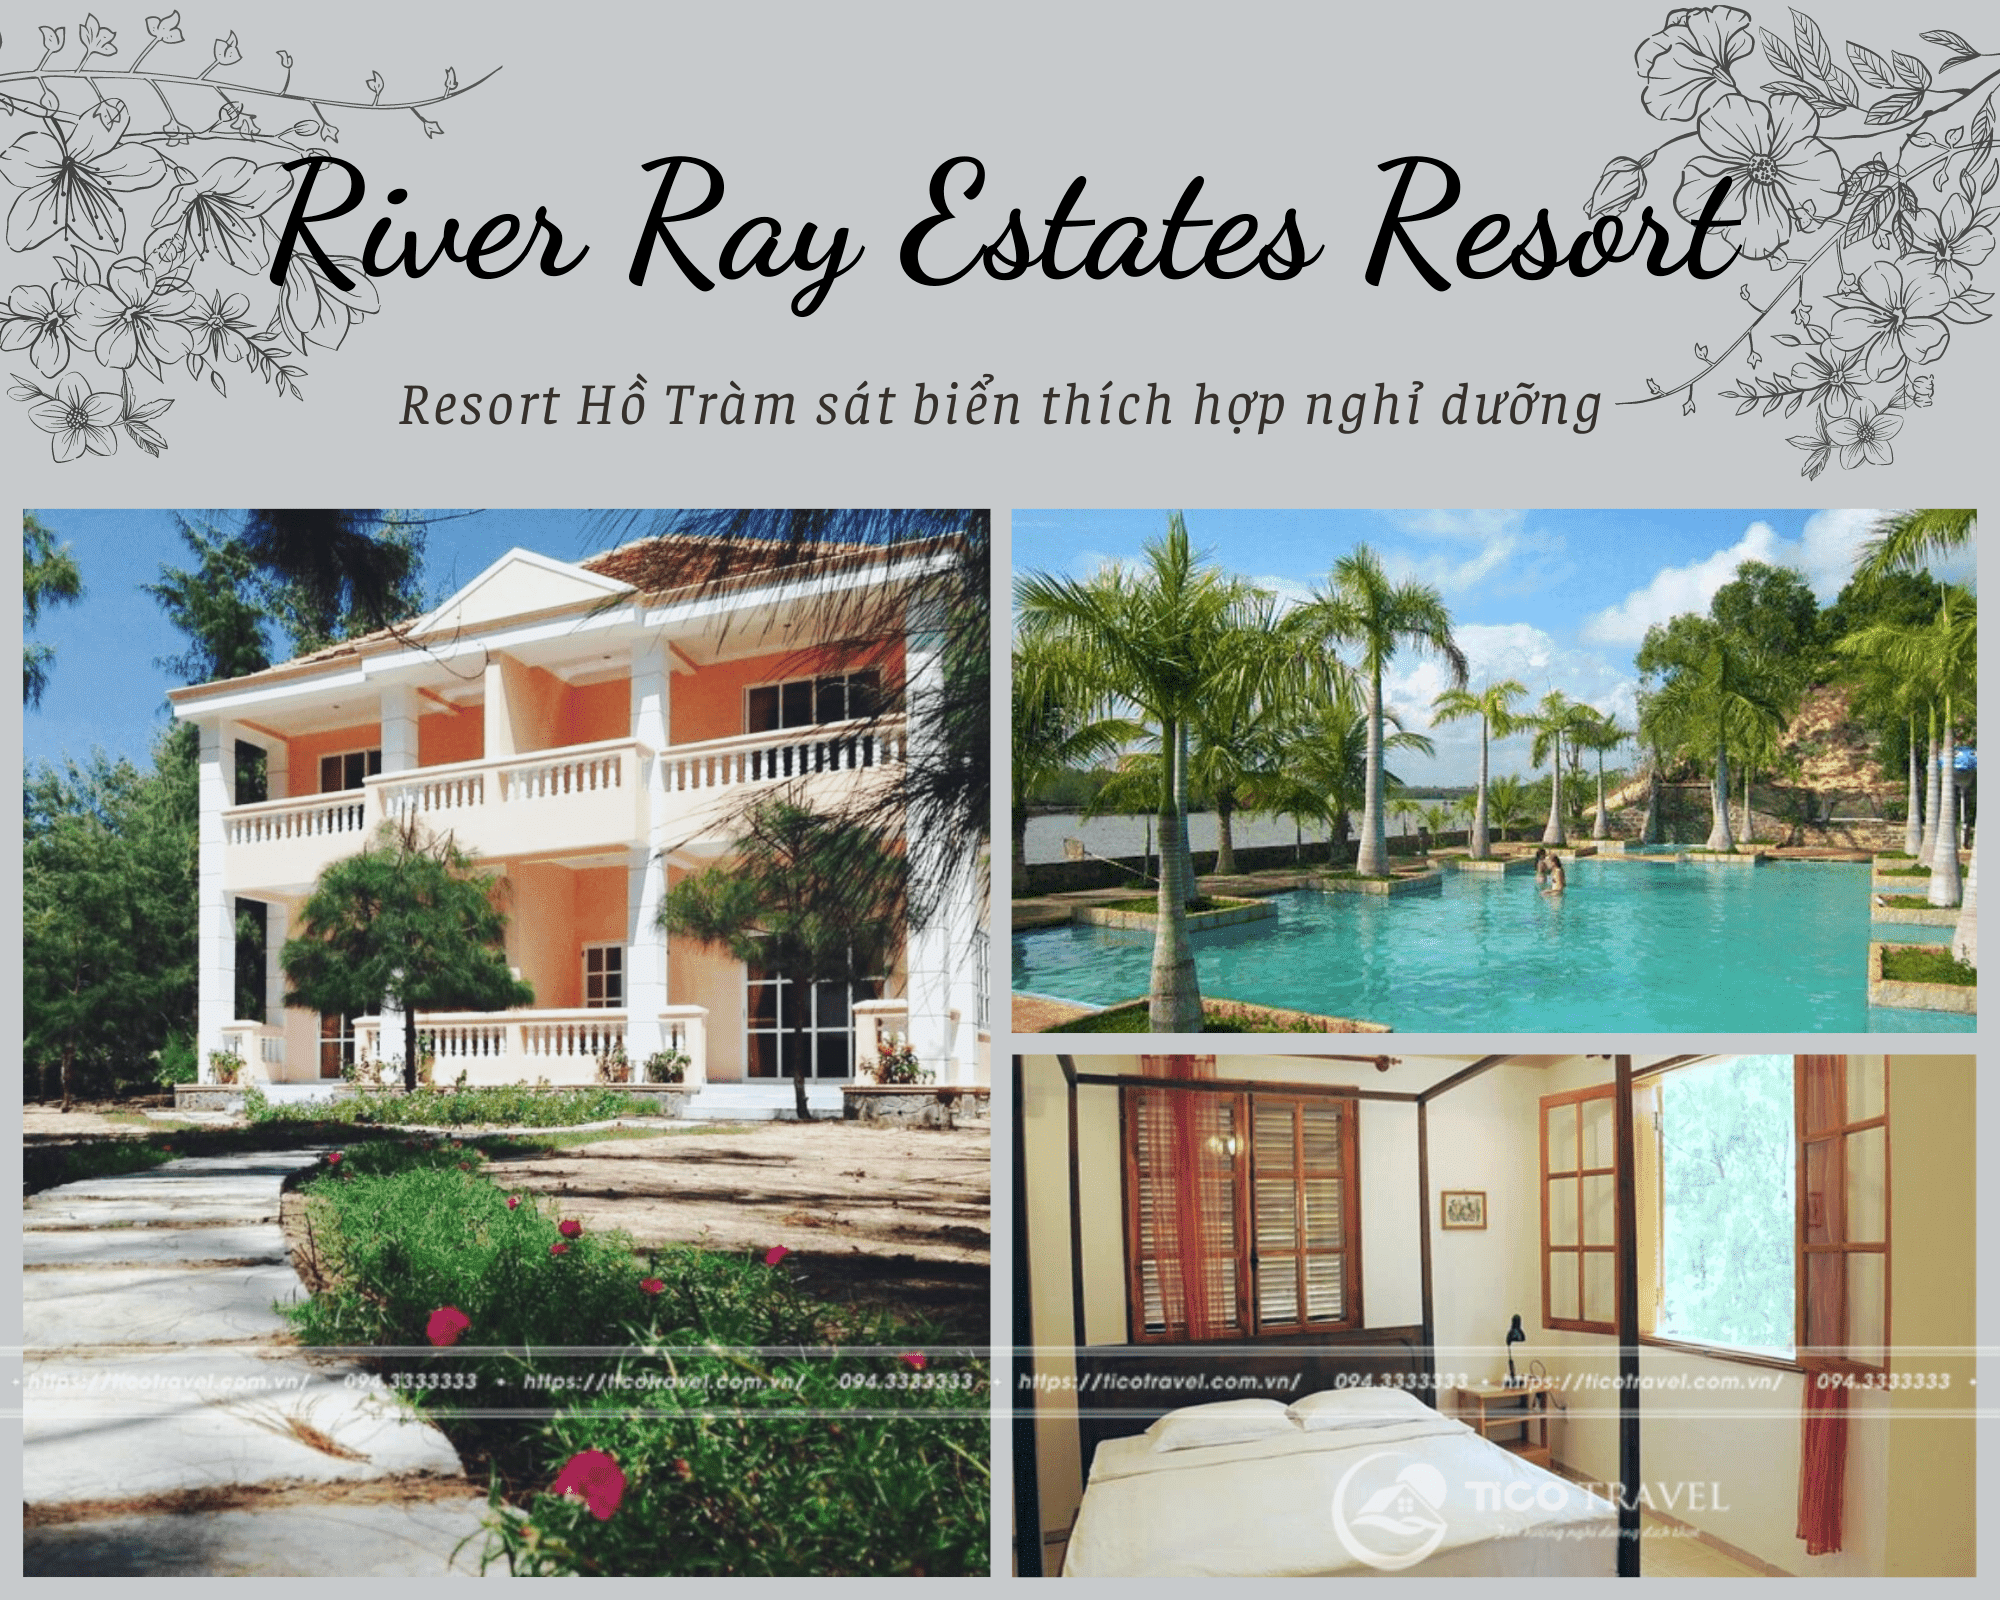 River Ray Estates Resort